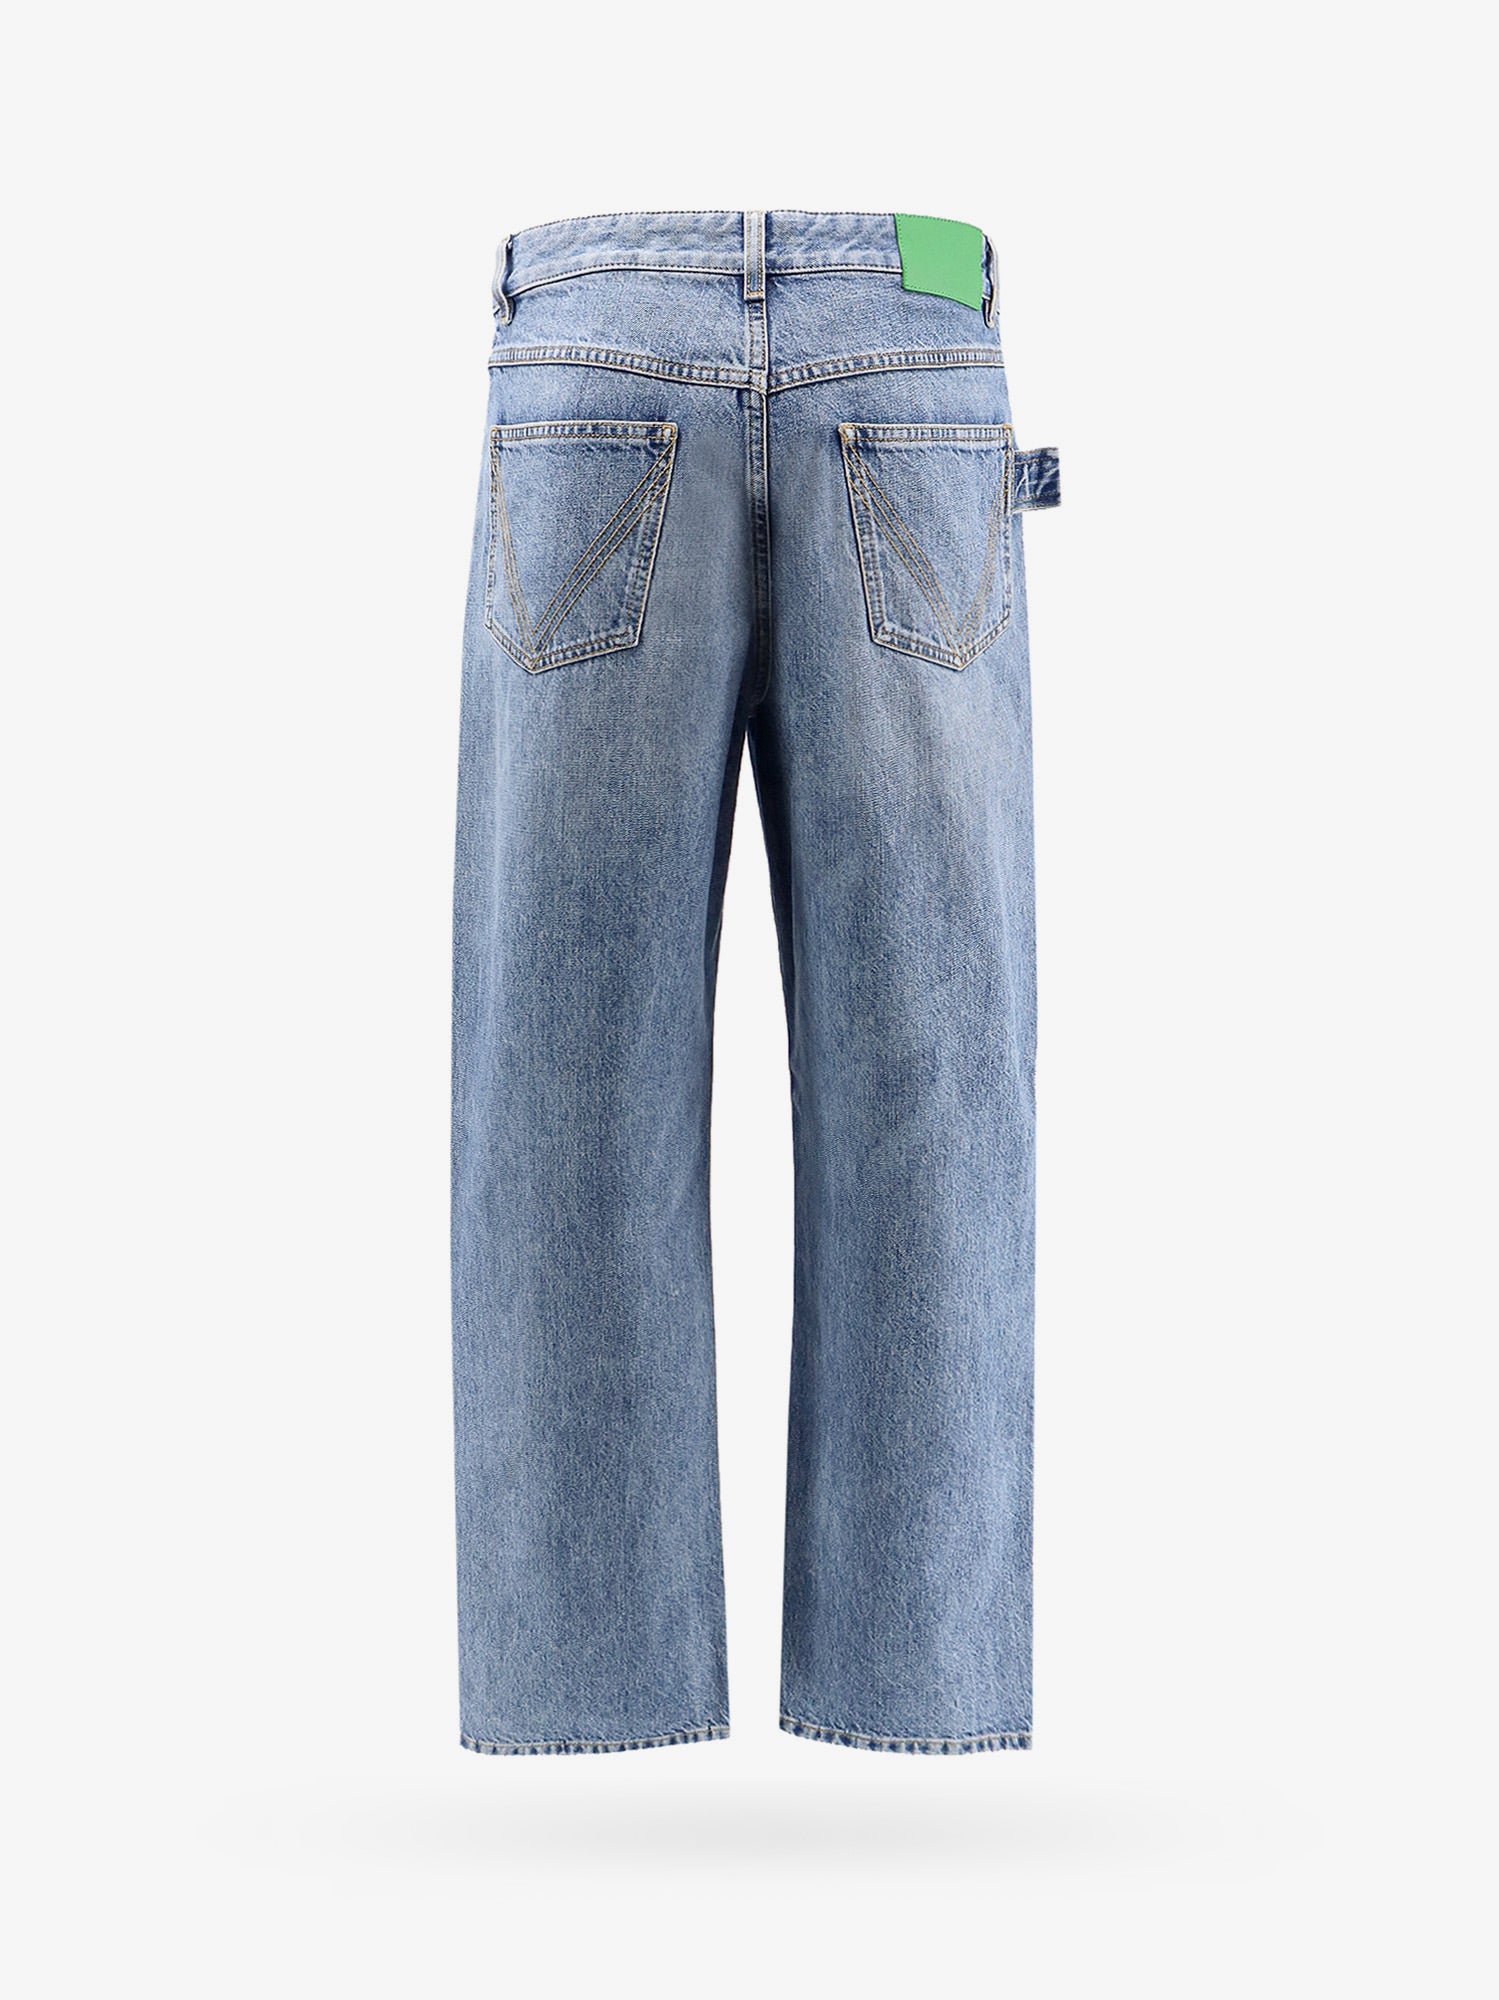 Men's jeans - Nugnes 1920